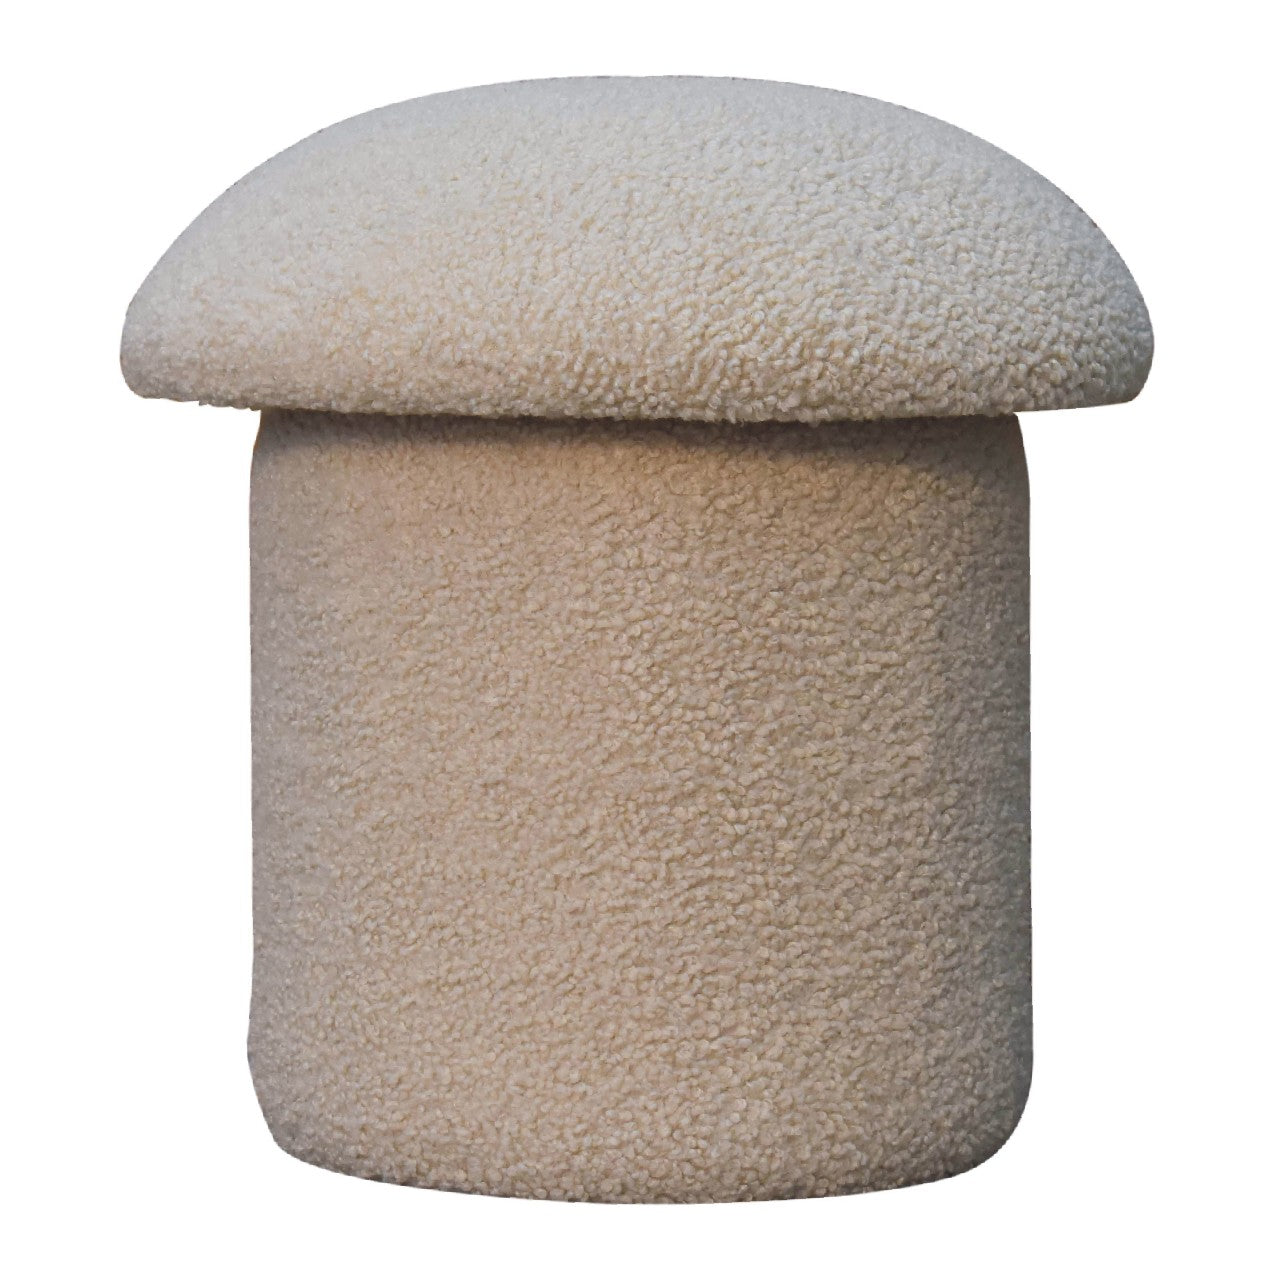 View Cream Boucle Mushroom Footstool information